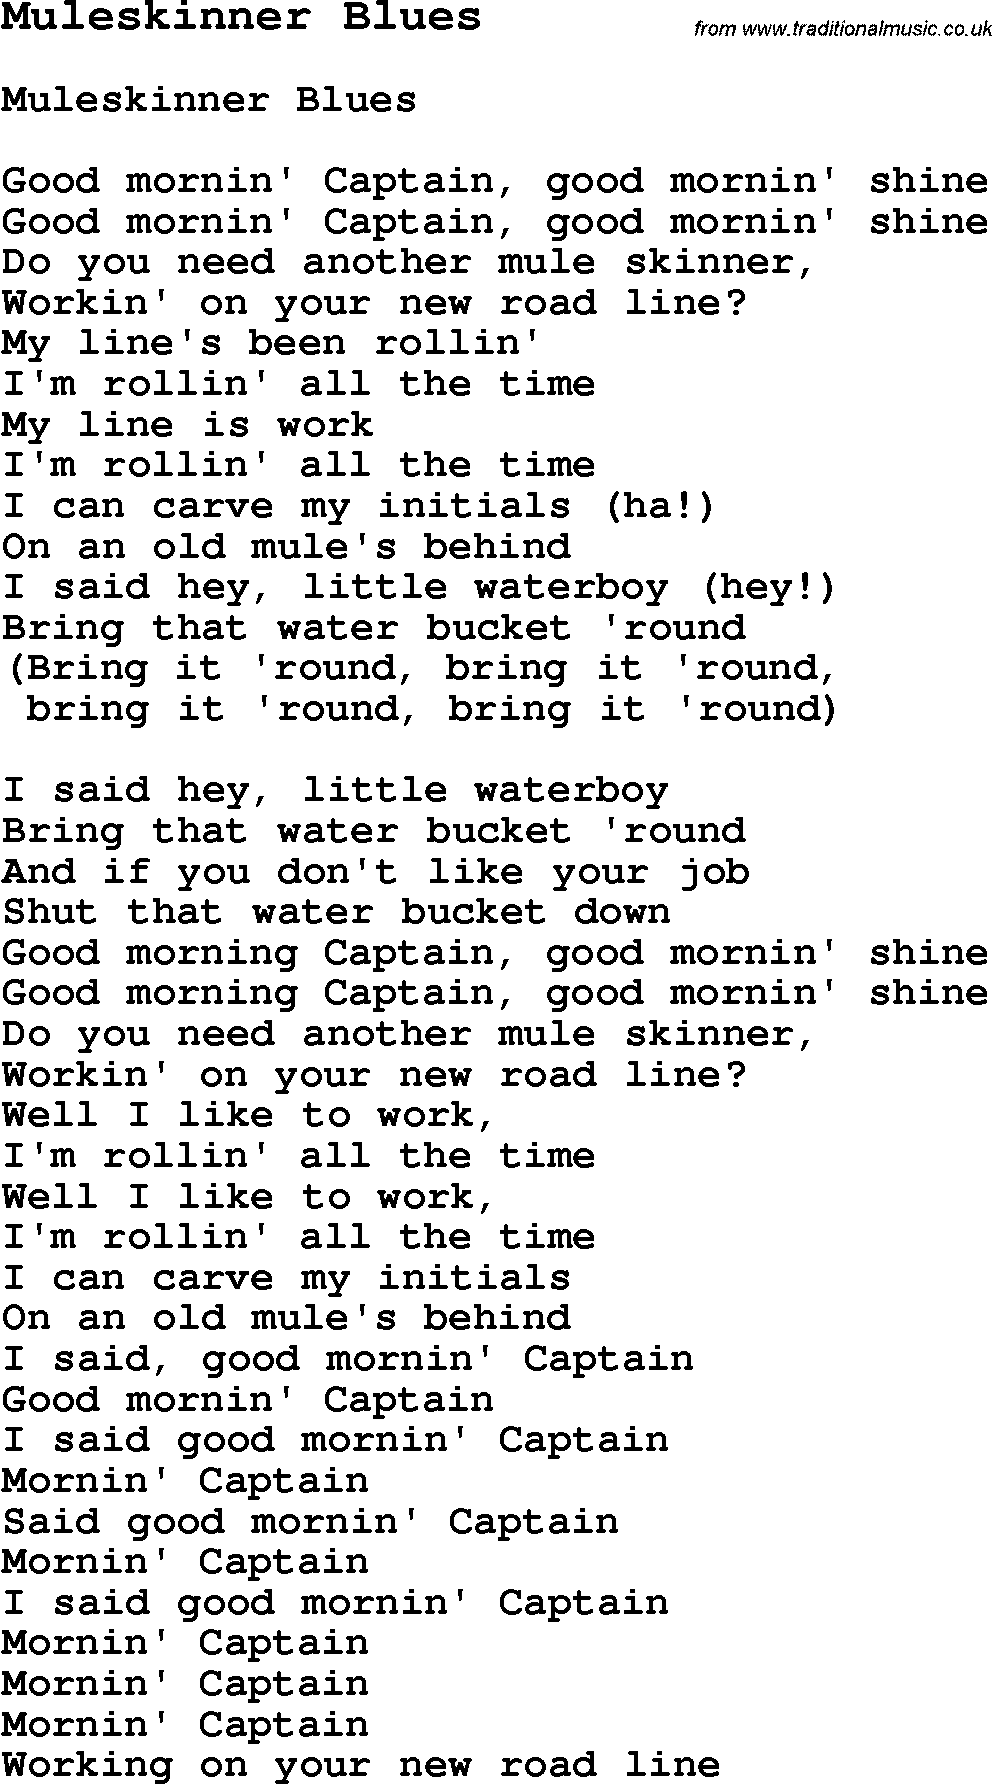 Skiffle Song Lyrics for Muleskinner Blues.